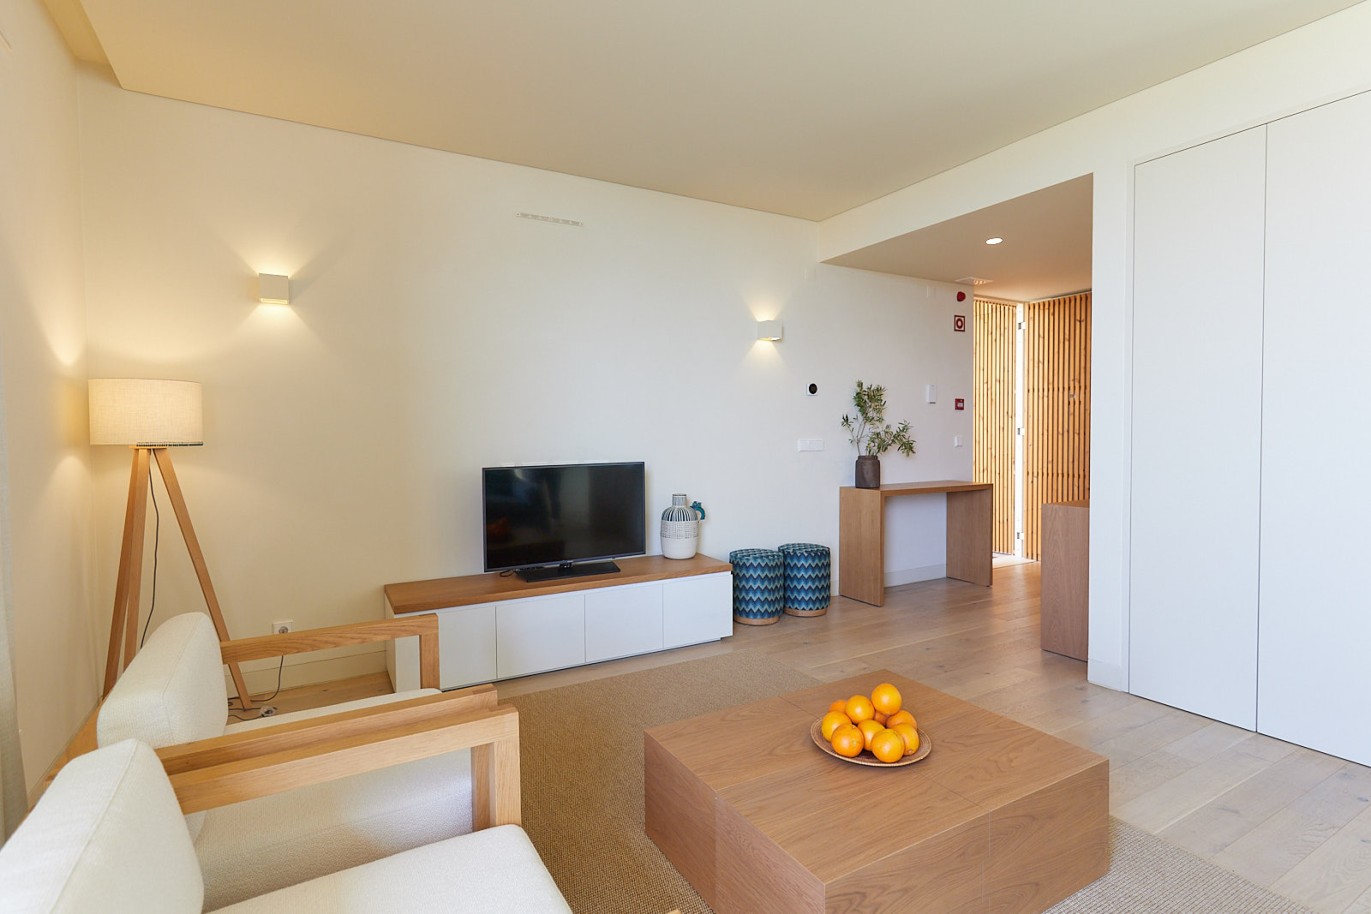 1 bedroom apartment in resort, for sale in Porches, Algarve_228993